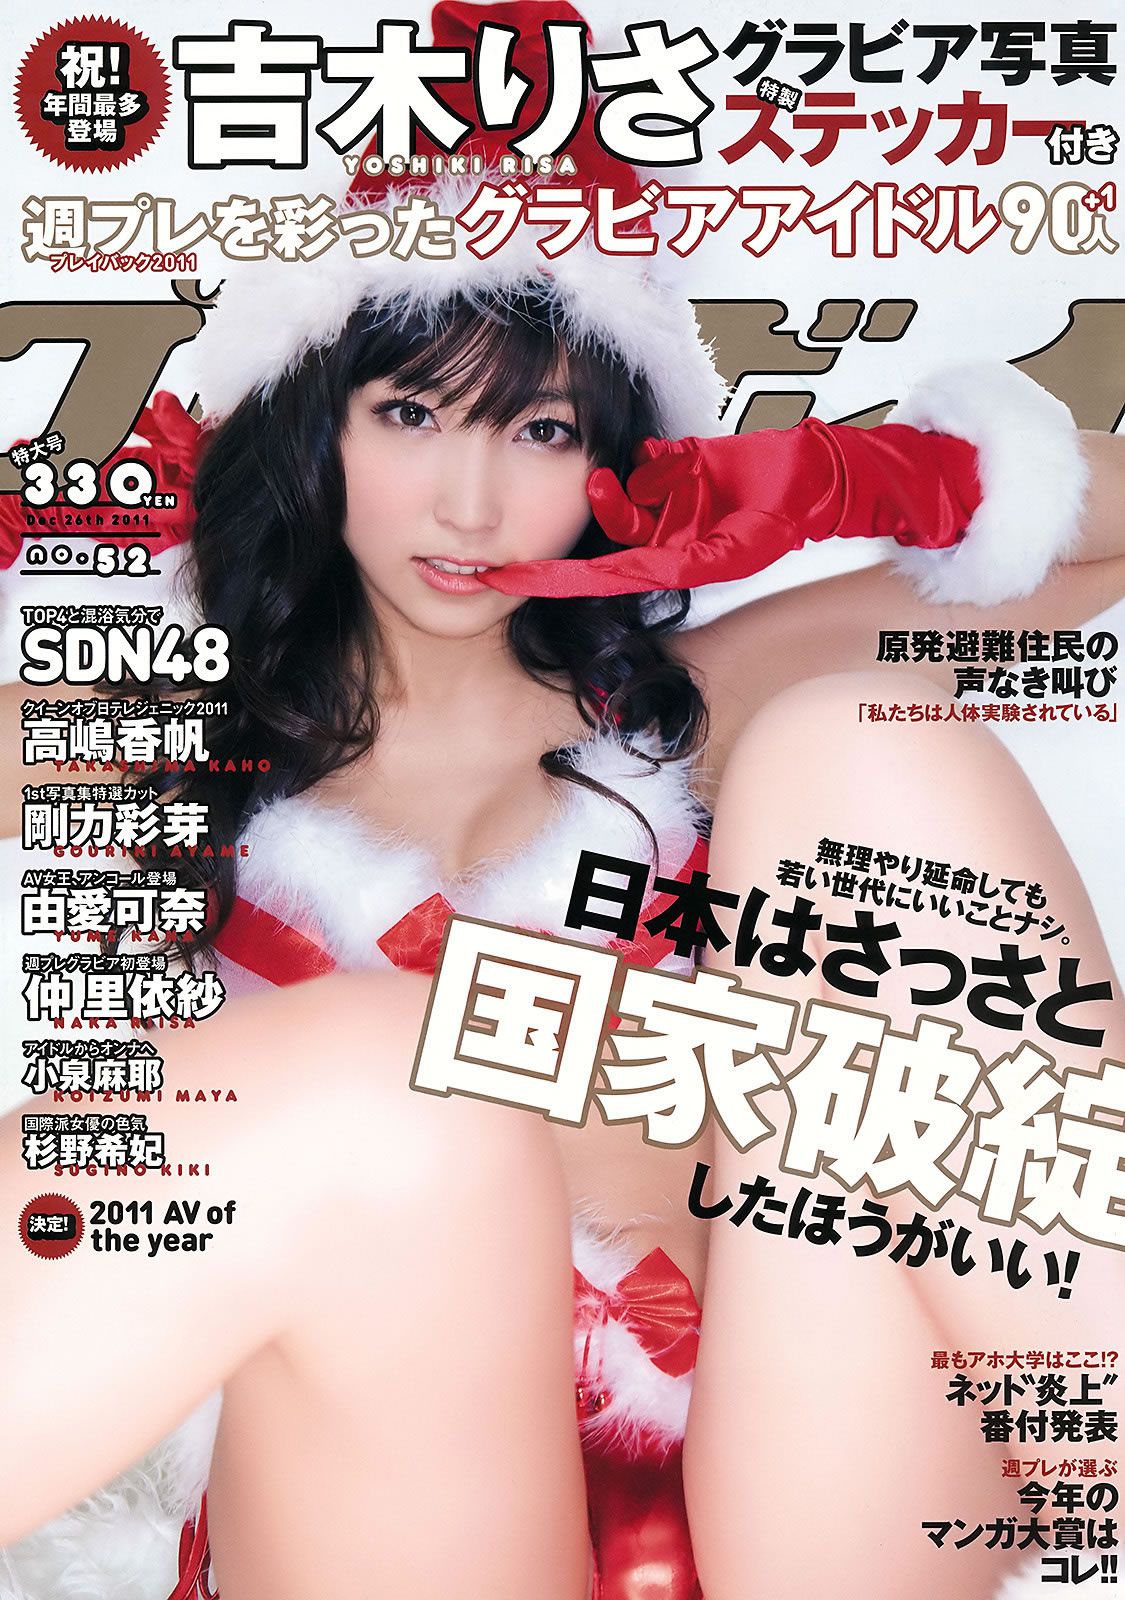 [Weekly Playboy] 2011.No.52 SDN48 高嶋香帆 [33P]